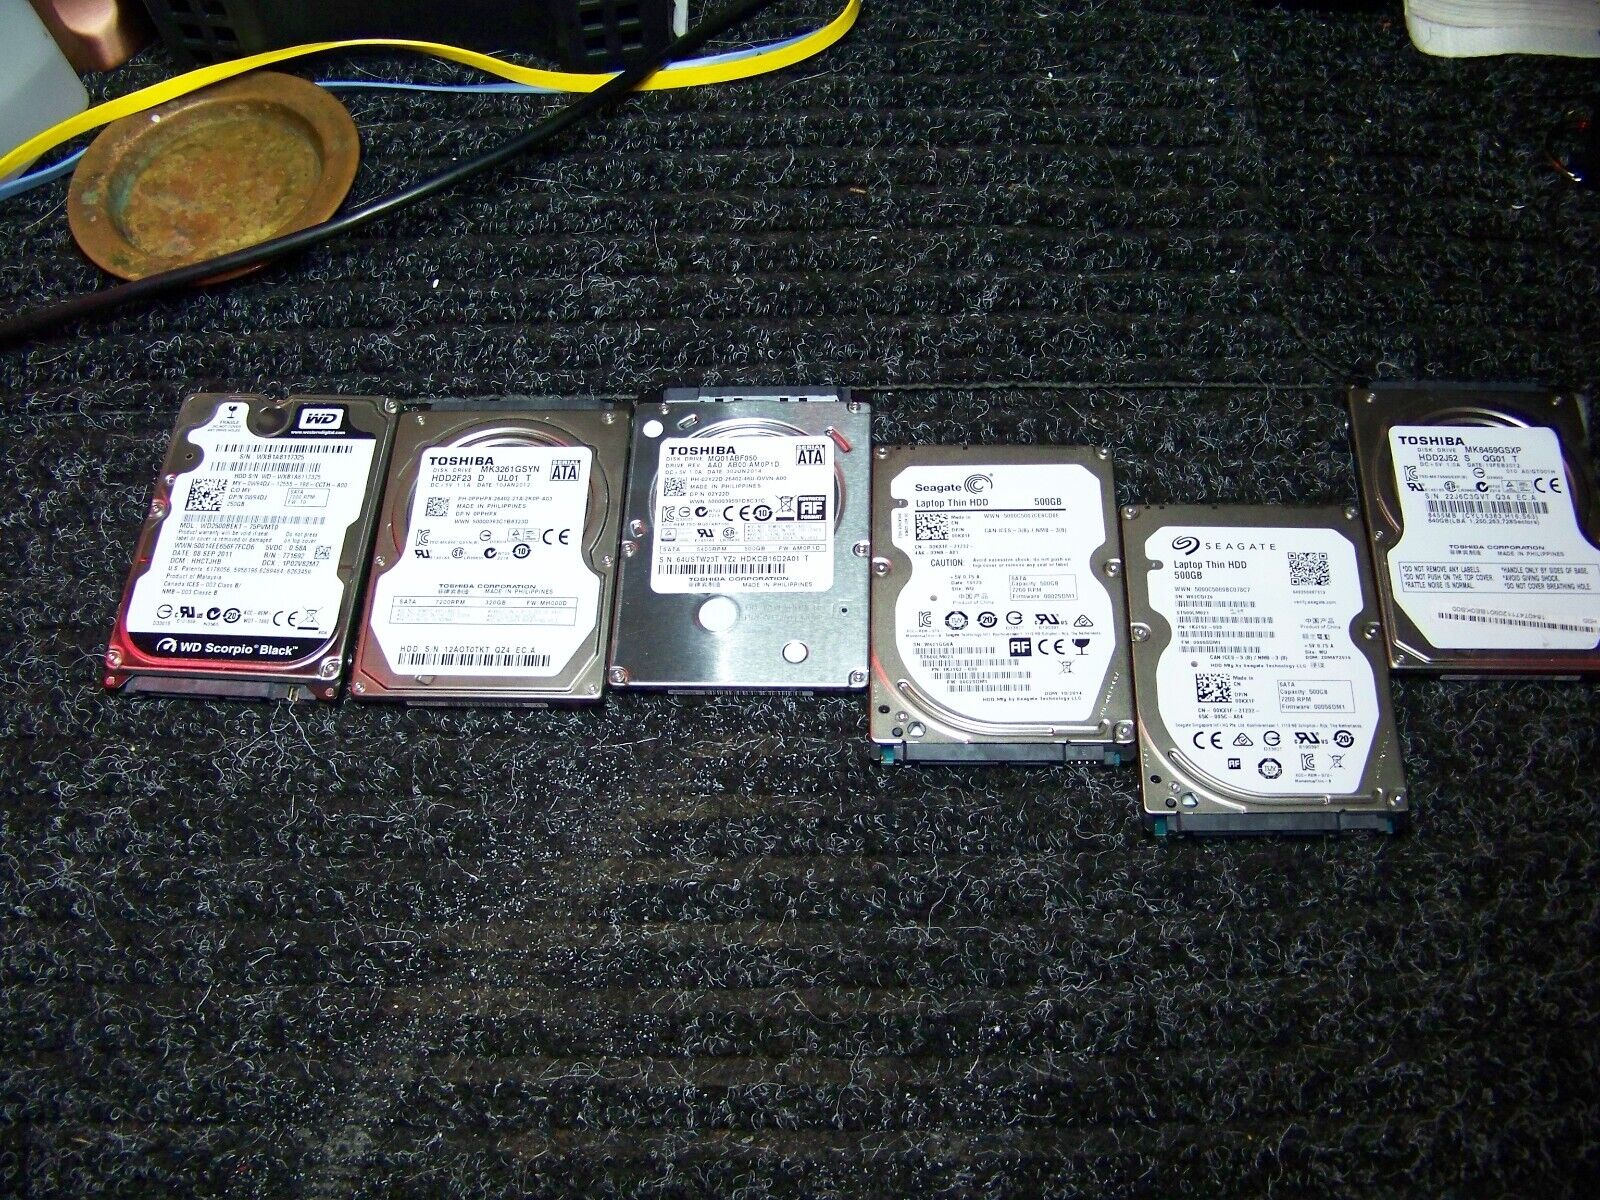 Lot of 6 SATA 3.5” Laptop HDDS_ 3-500GB, 1-650GB, 1-320GB, 1-250GB✅Passed Tests✅